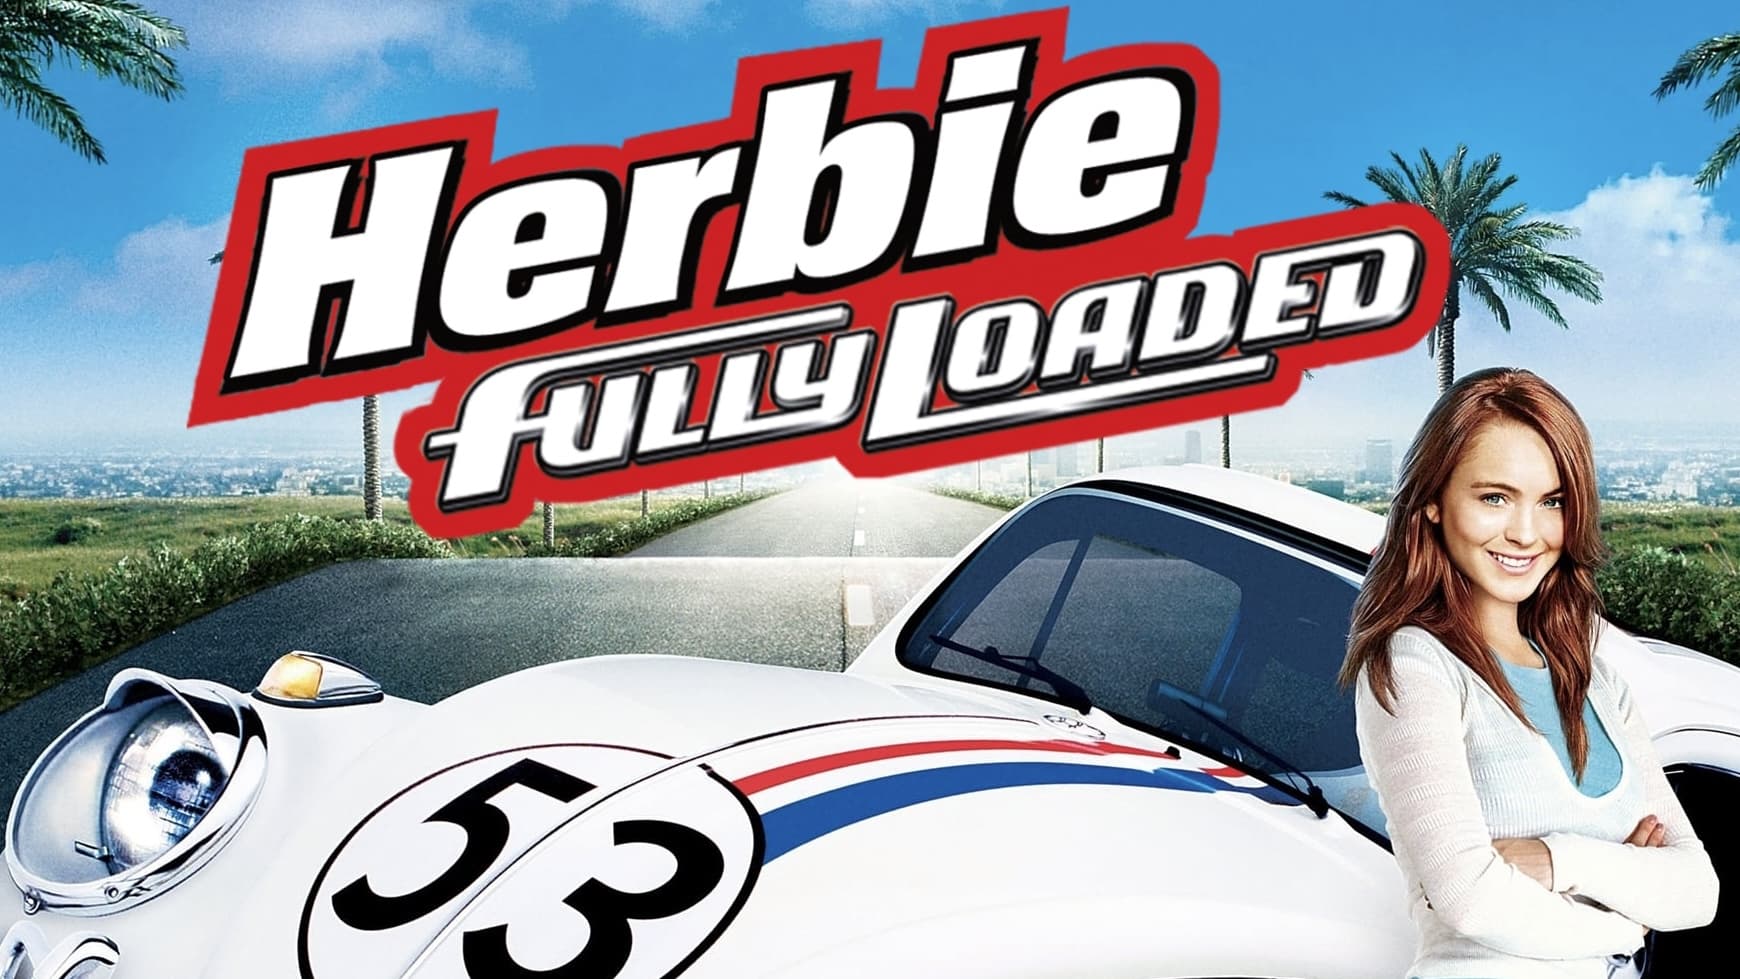 Herbie: A tope